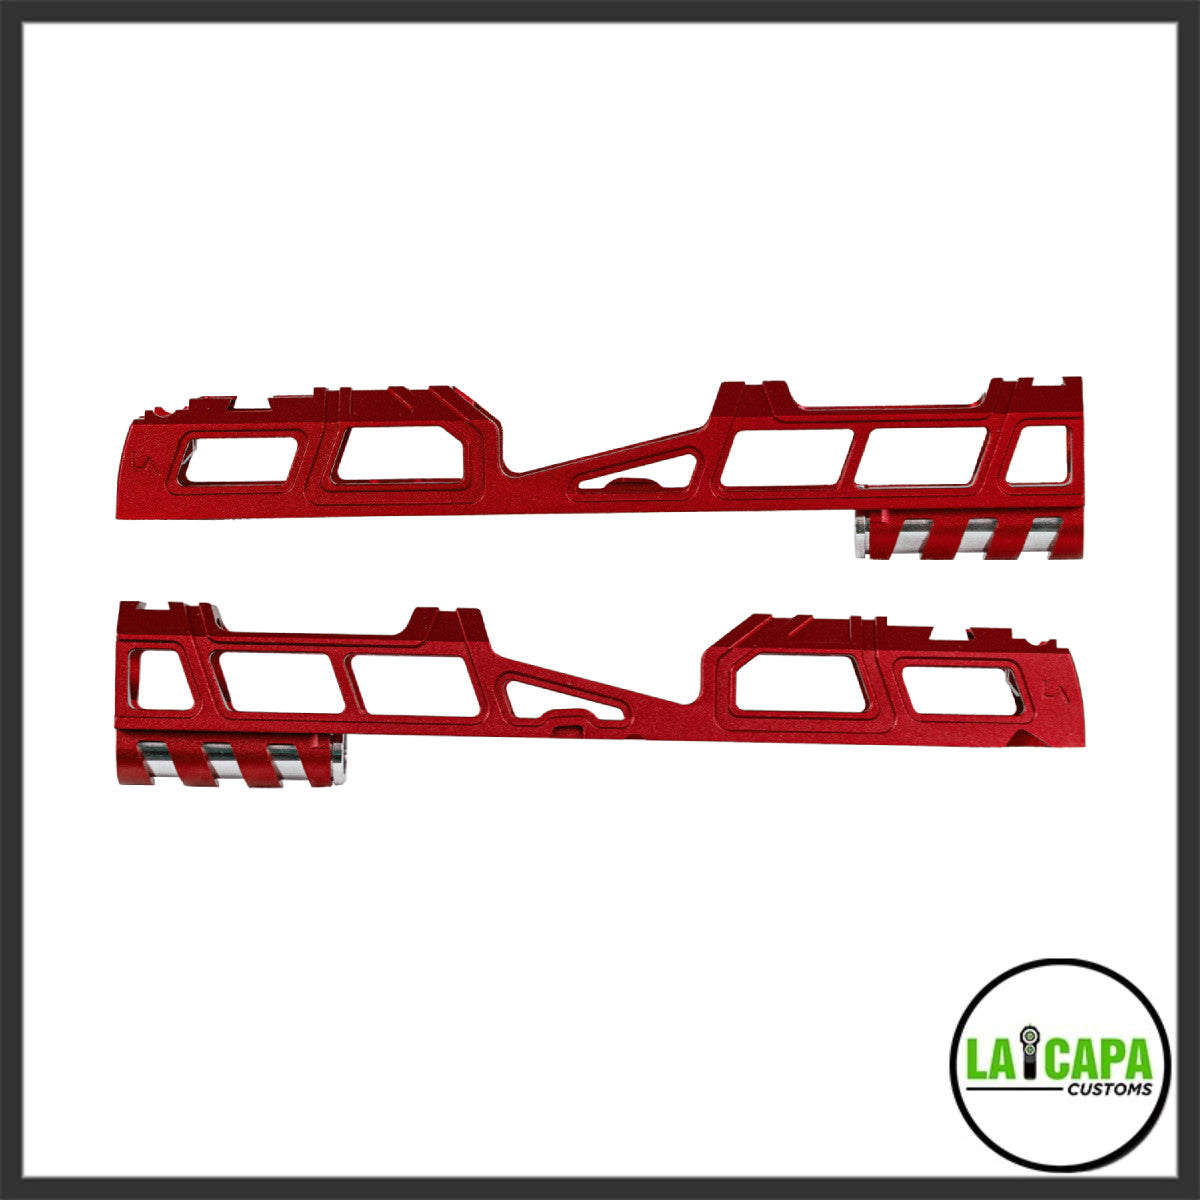 LA Capa Customs 5.1 “Hyper” Aluminum Slide - Red